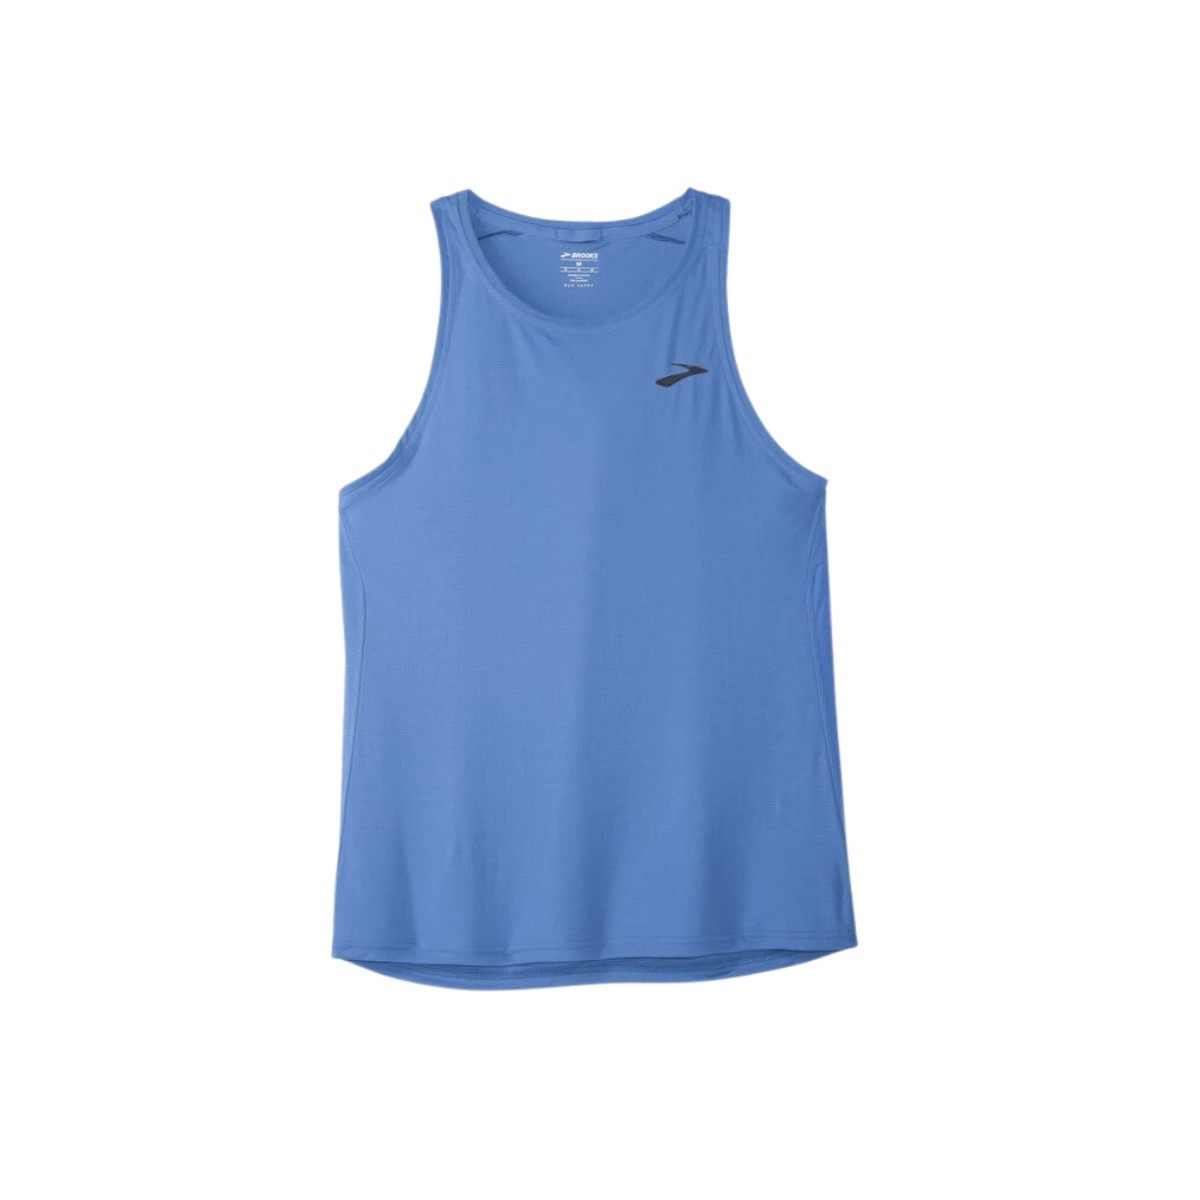 Brooks Atmosphere Singlet Sleeveless Shirt Blue, Size S